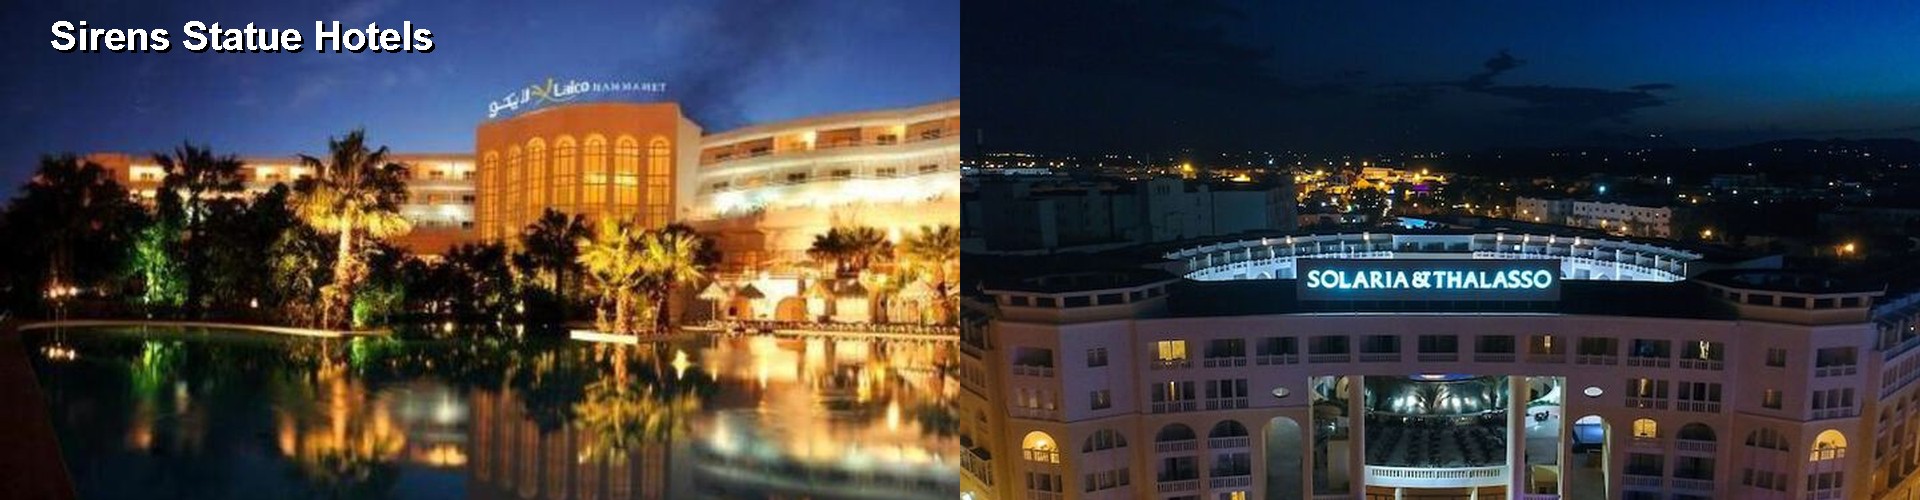 5 Best Hotels near Sirens Statue